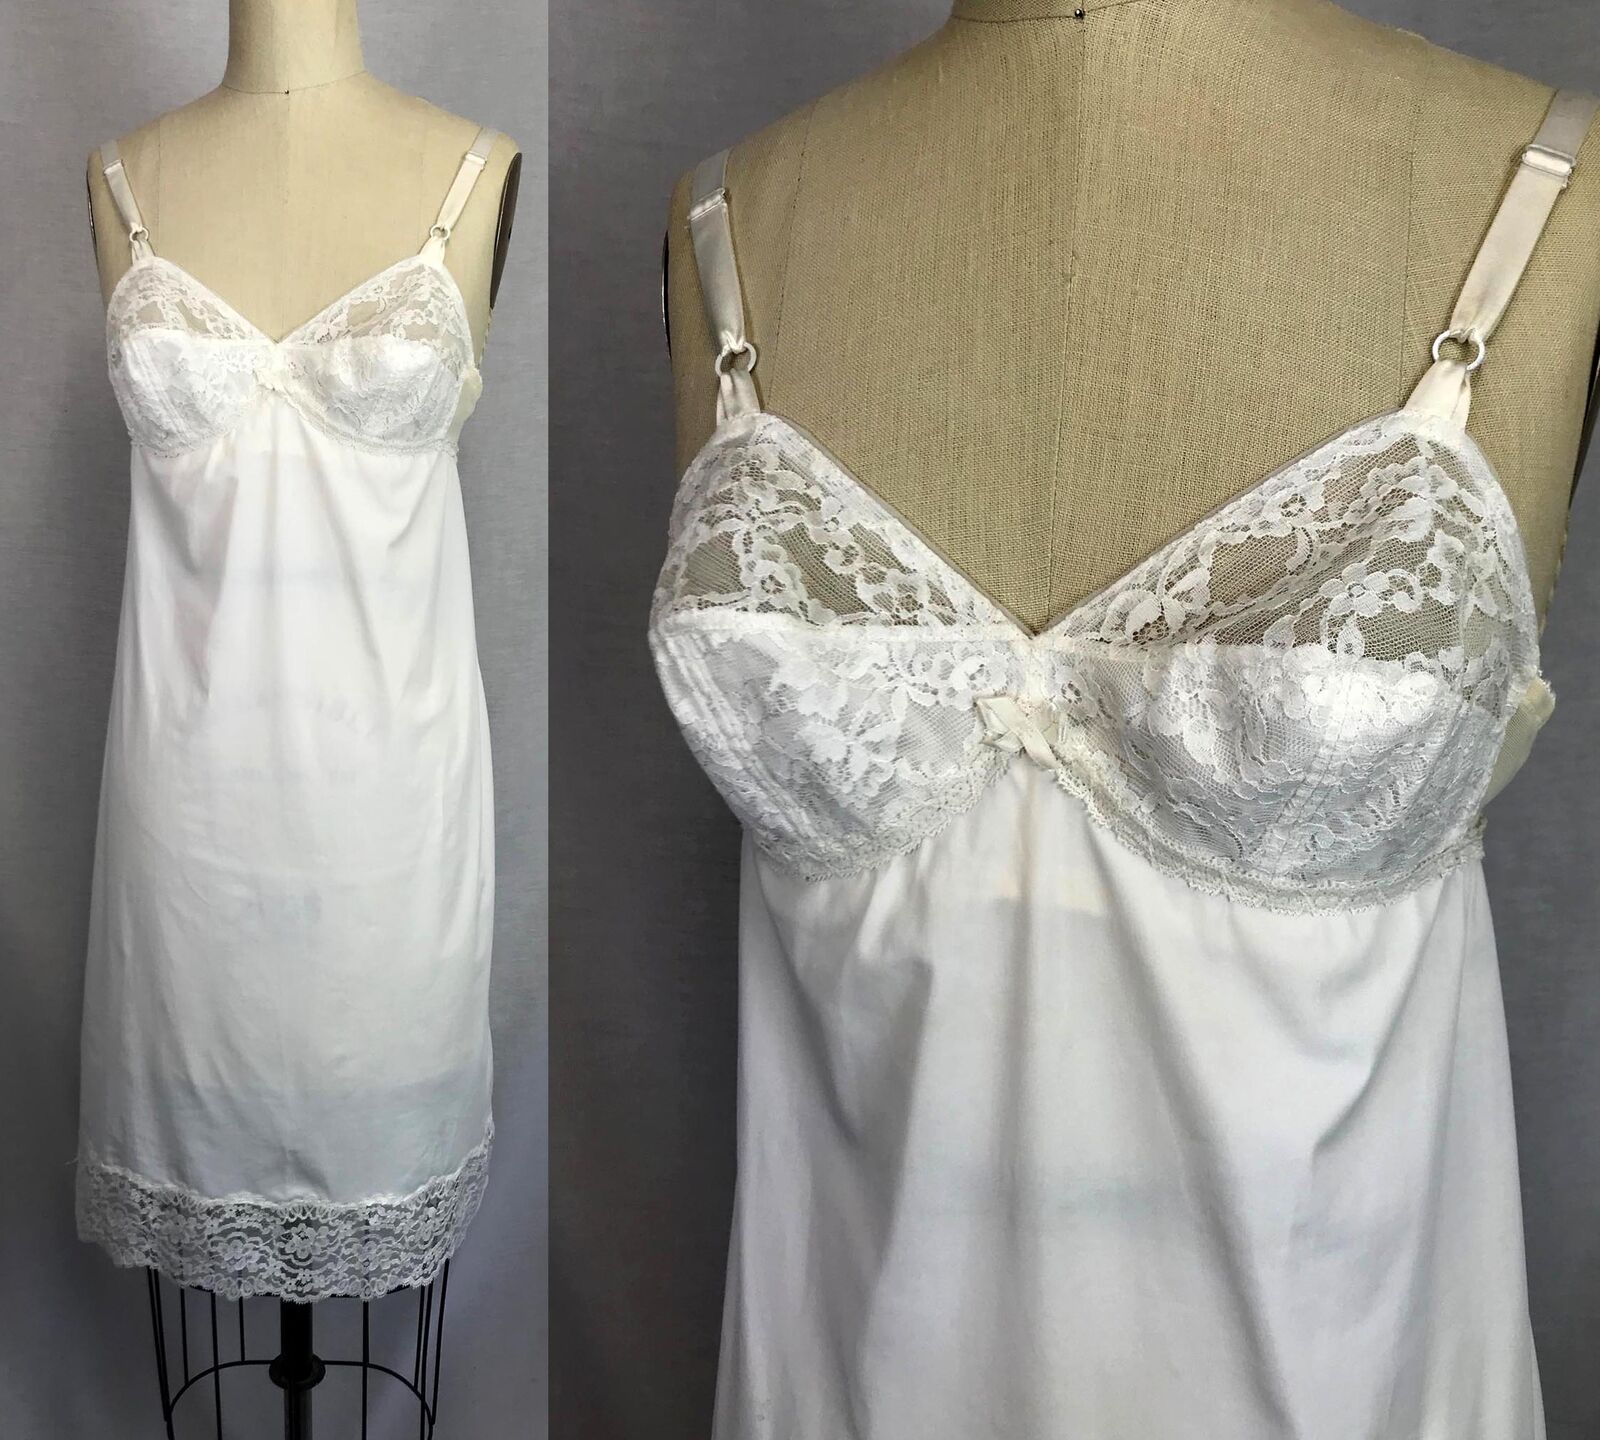 Vintage Retro Women Girl Bullet Bra Lingerie Intimate Wear Best Form Hudson  Bay White Cotton 40s 50s Mid Century Size Small 34B Undergarment -   Israel